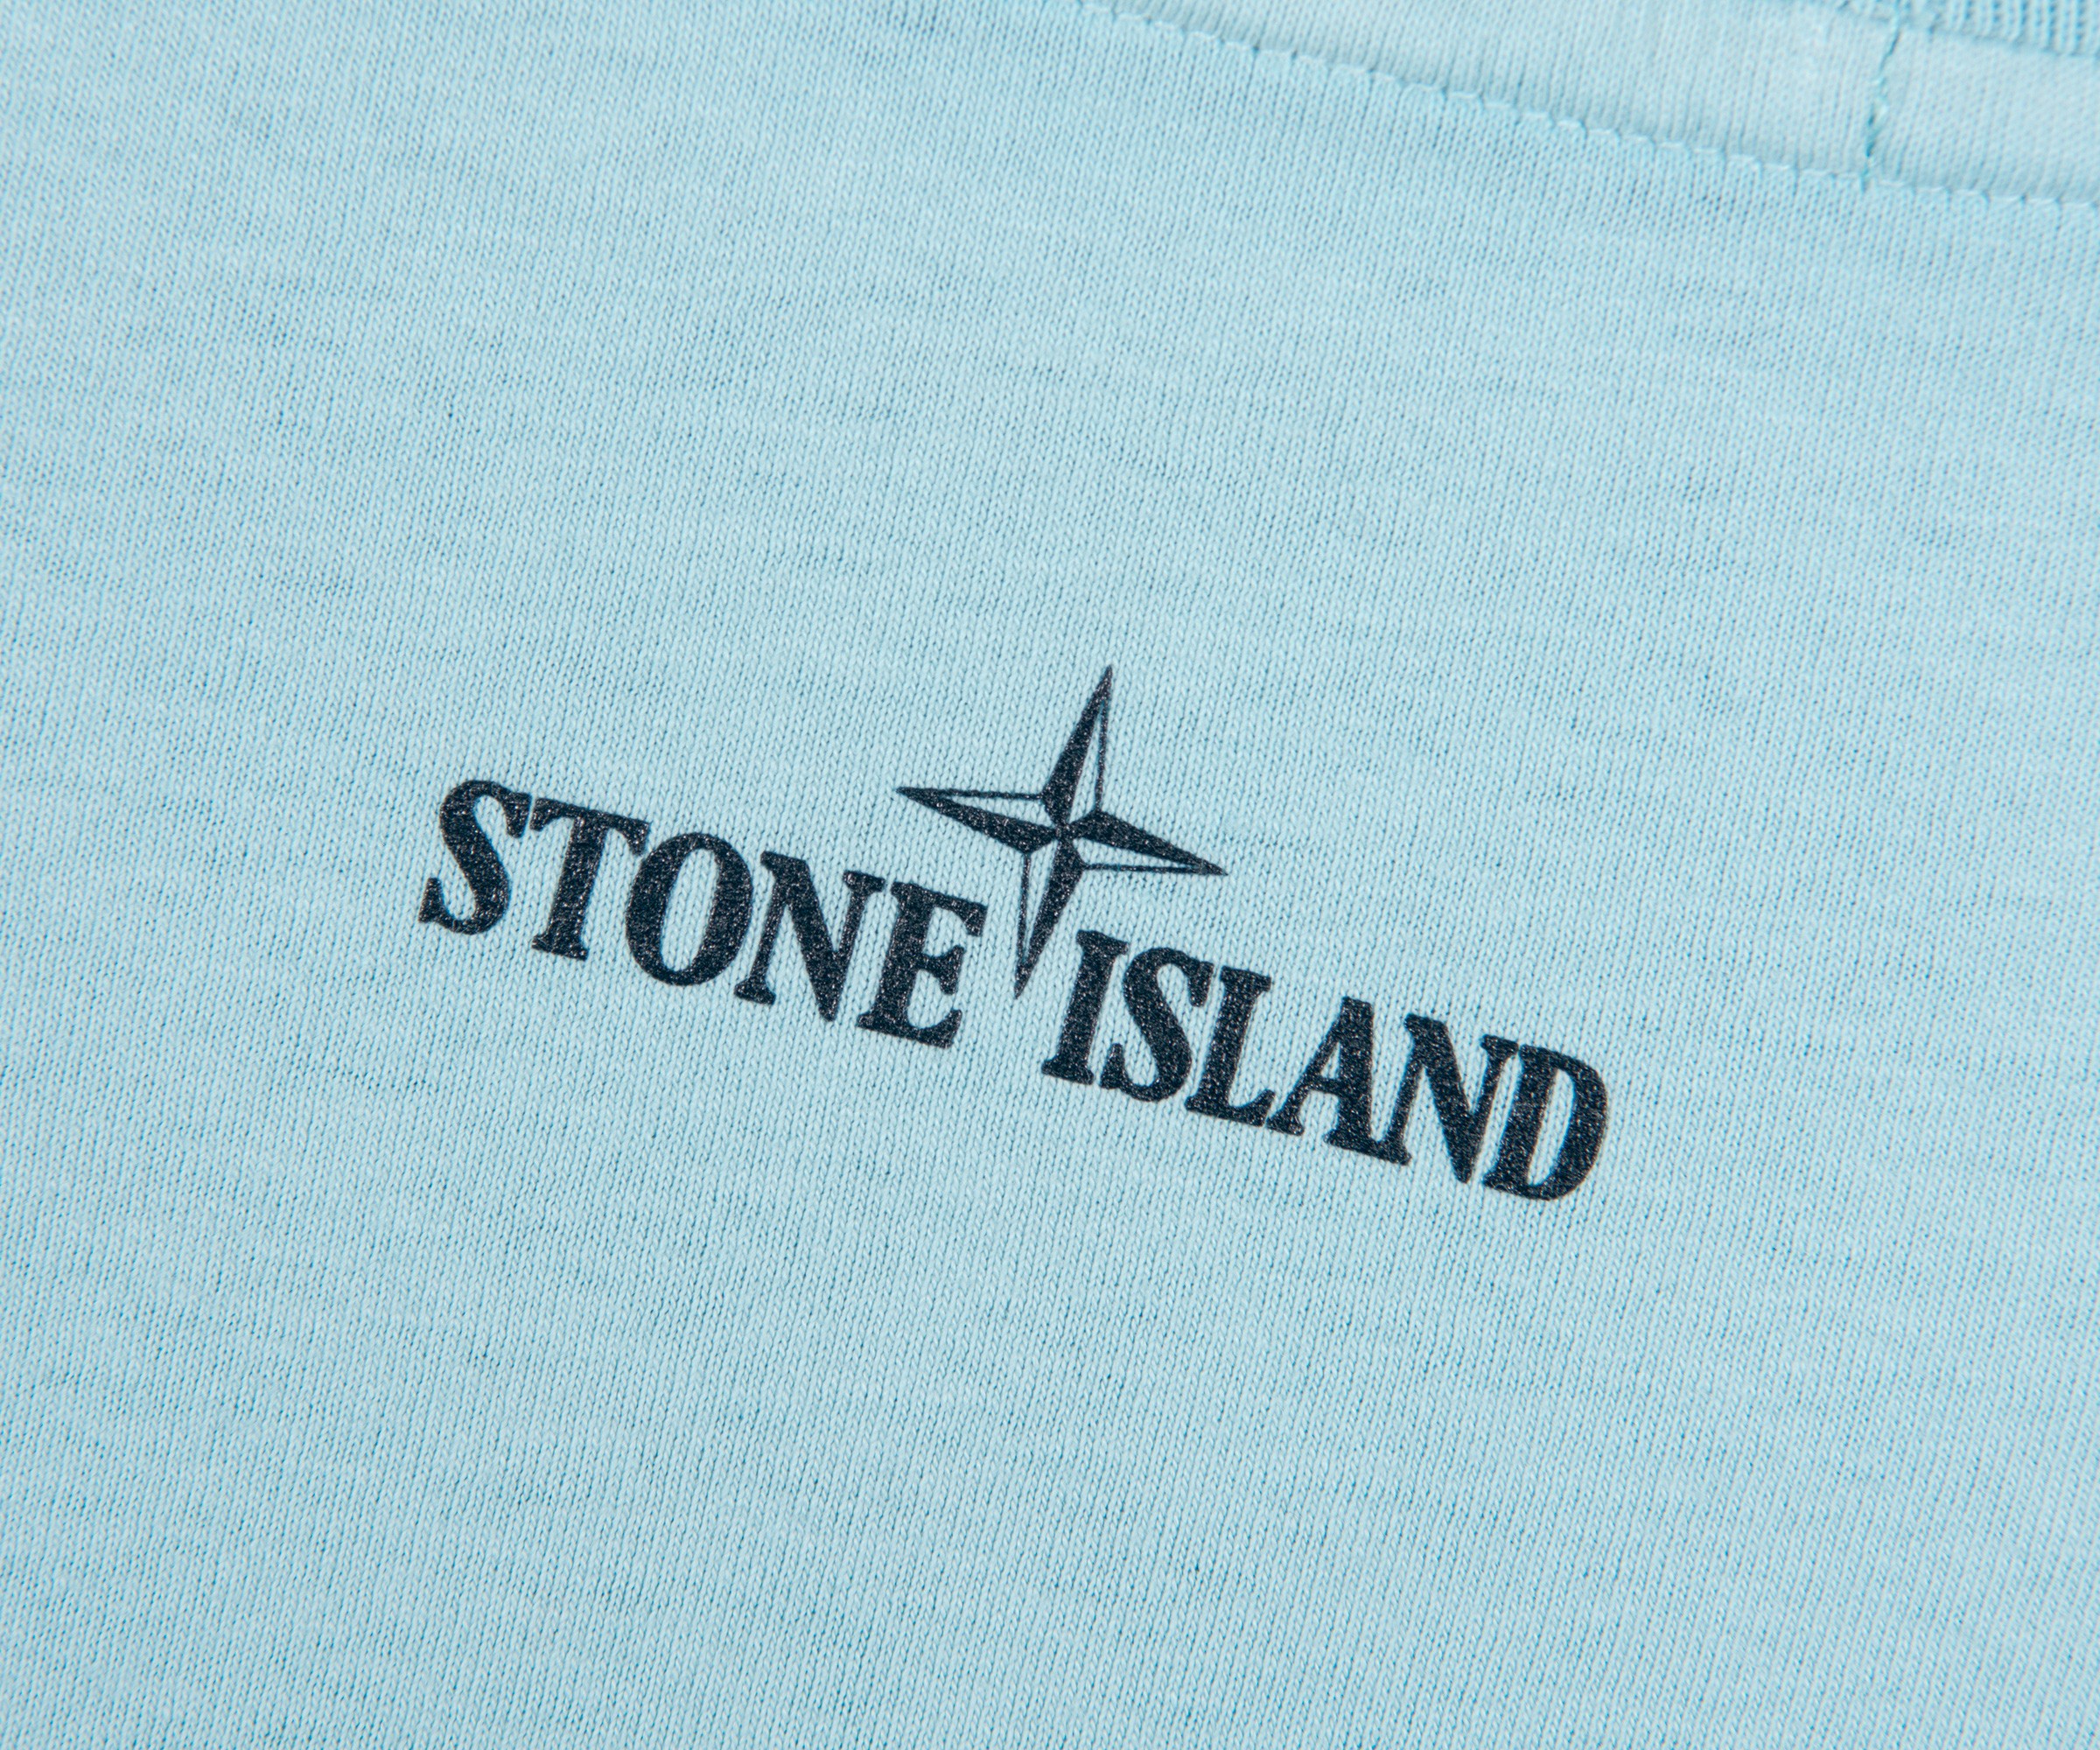 Stone Island 'Raised Centre' Target Logo T-Shirt Aqua